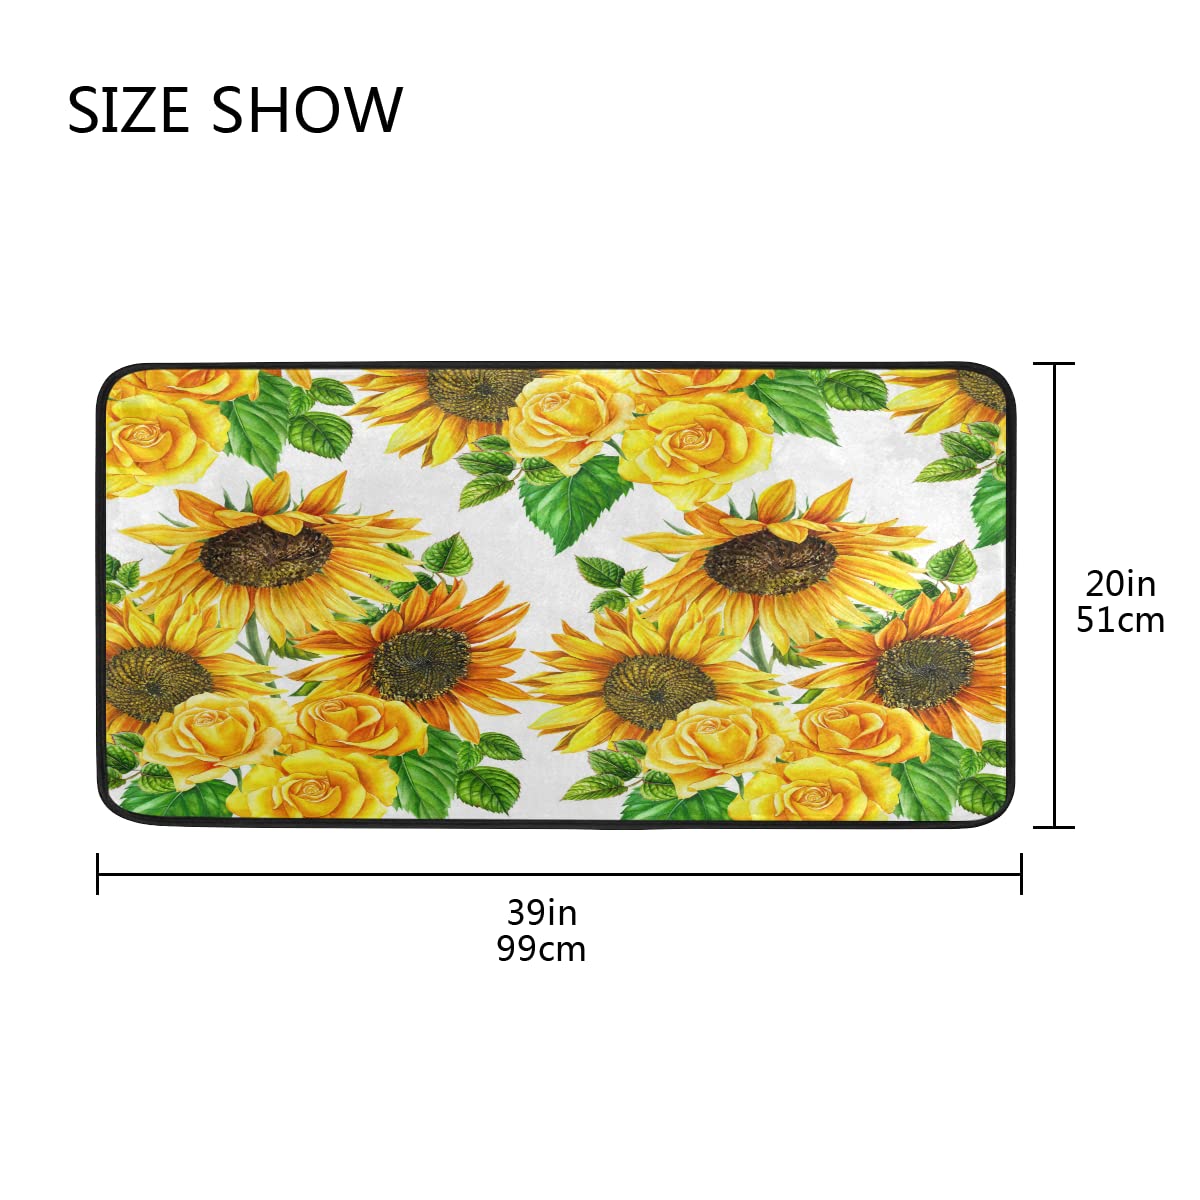 ALAZA Sunflower Kitchen Rug, Yellow Sunflower Rose Non Slip Bath Runner Rugs Mat for Bathroom Kitchen Indoor Floor Mats Doormat 39"x 20"